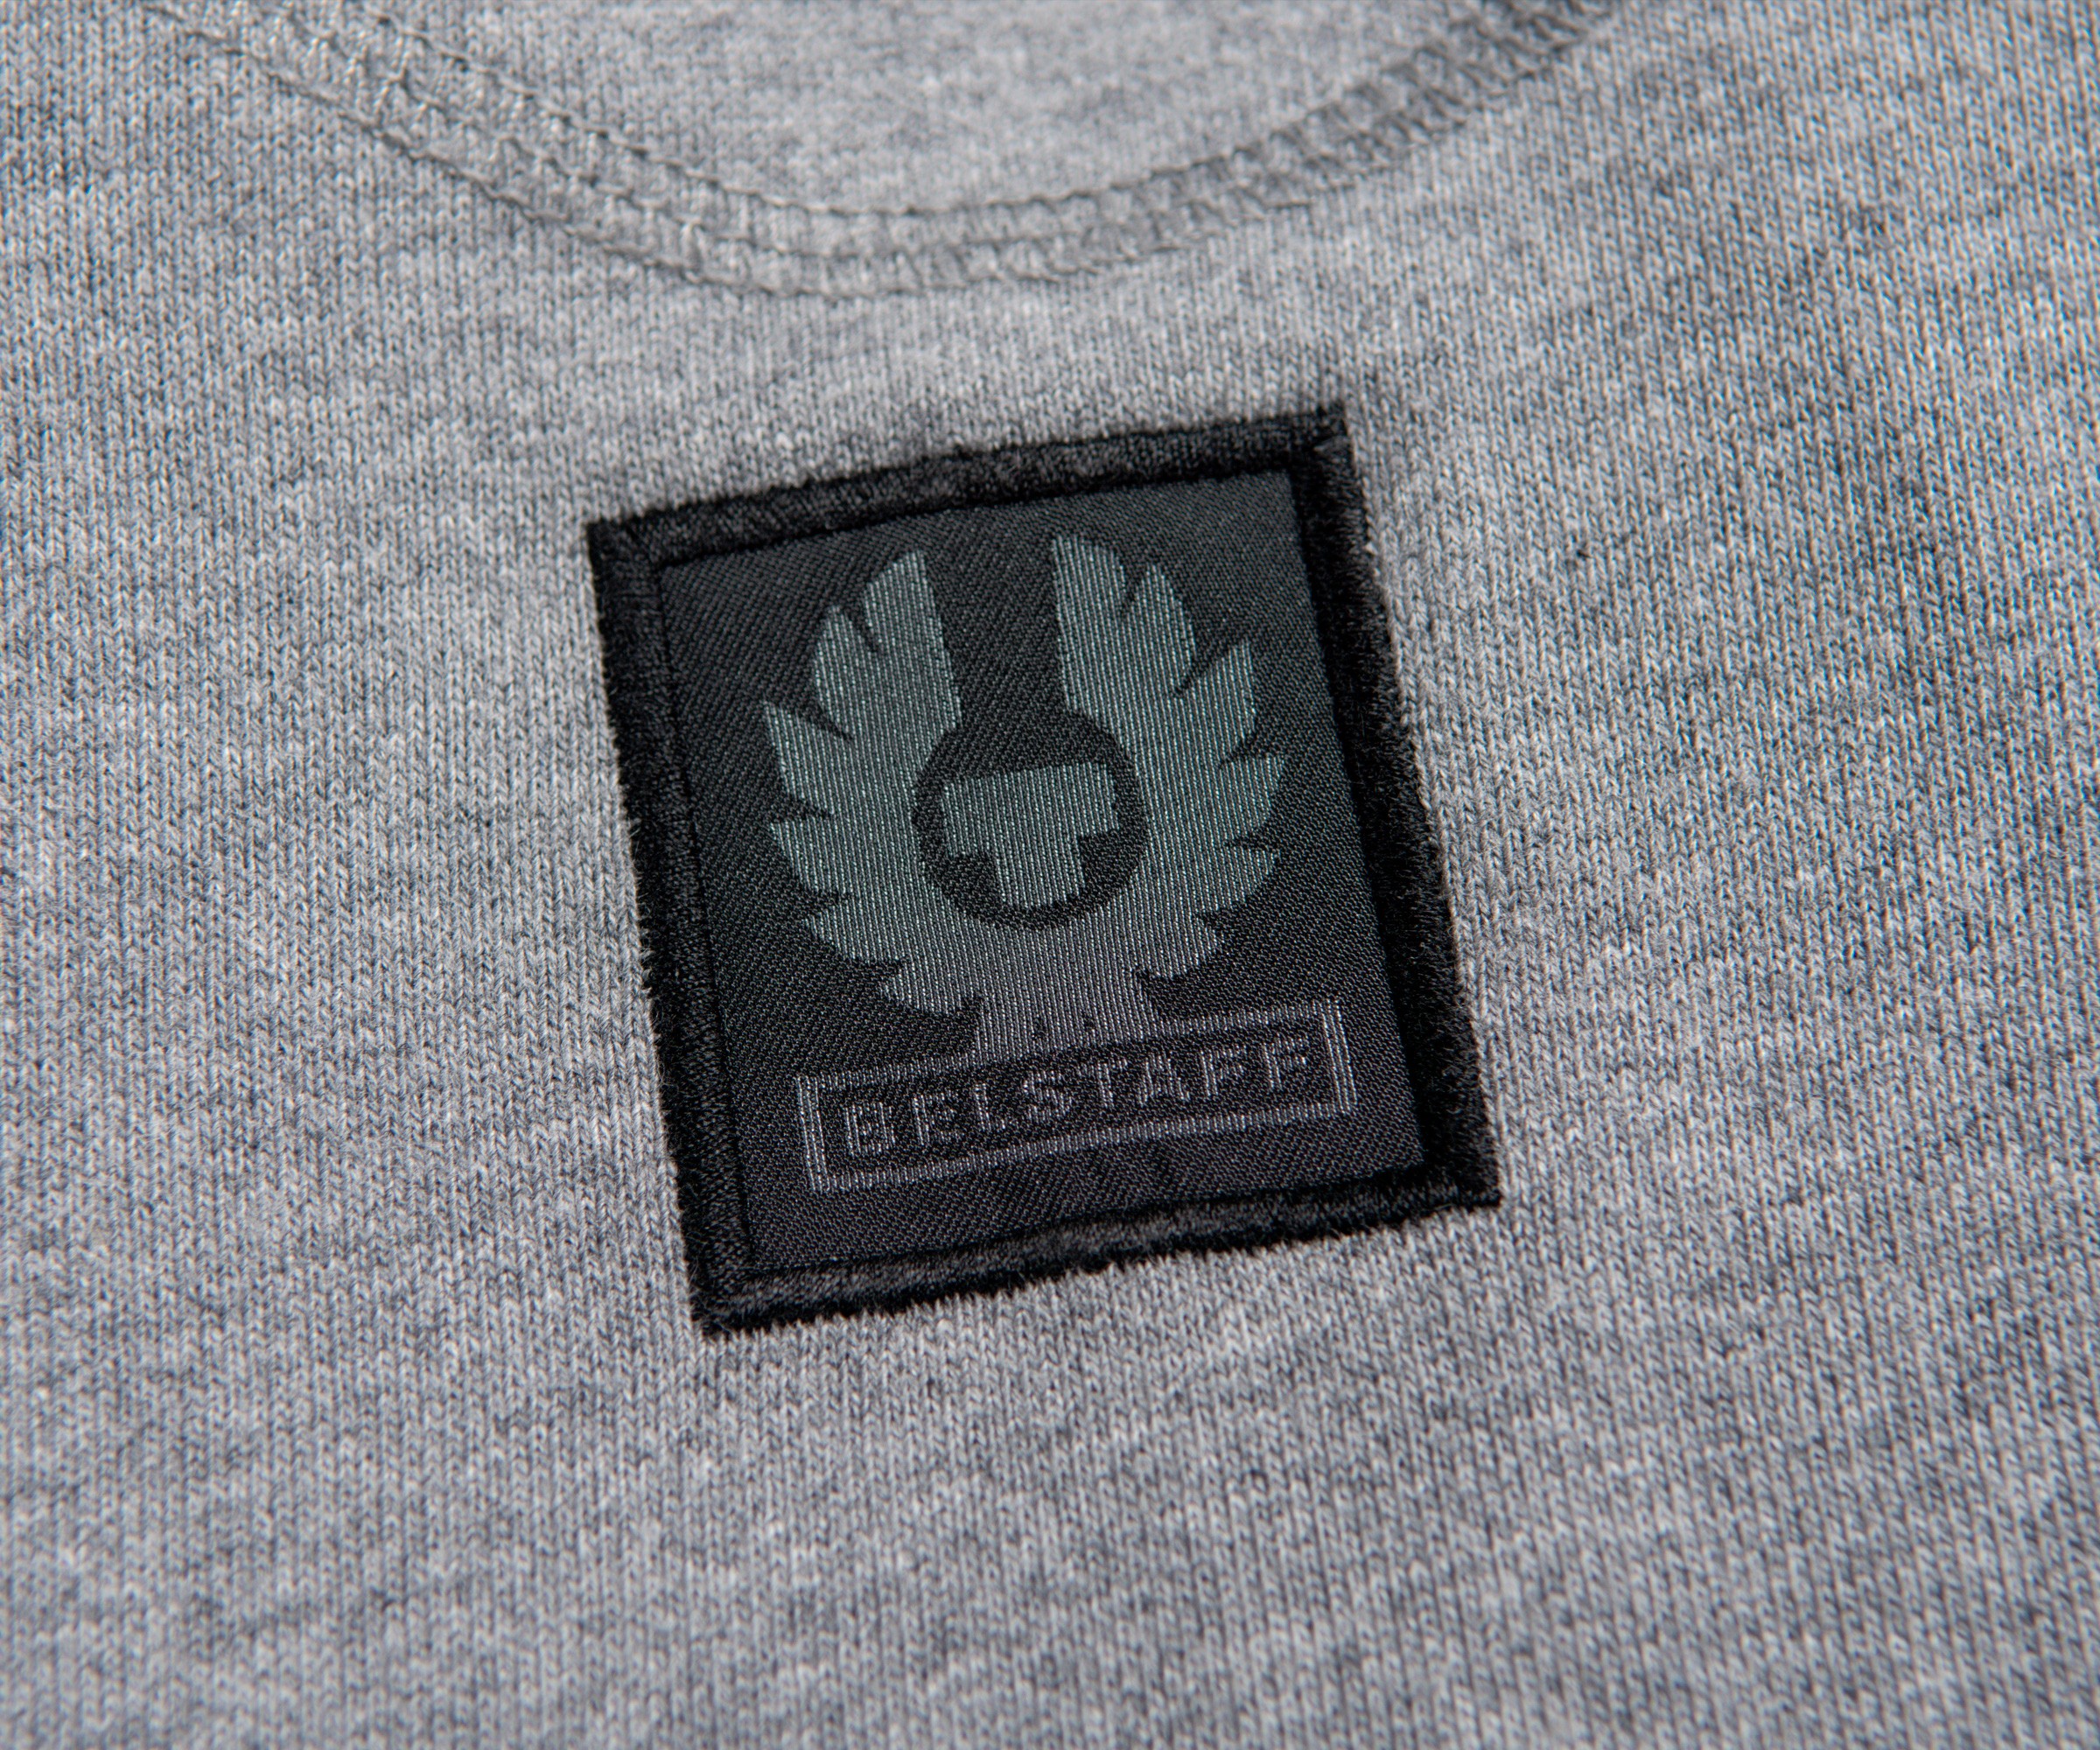 Belstaff Jefferson Arm Box Logo Sweatshirt Dark Grey